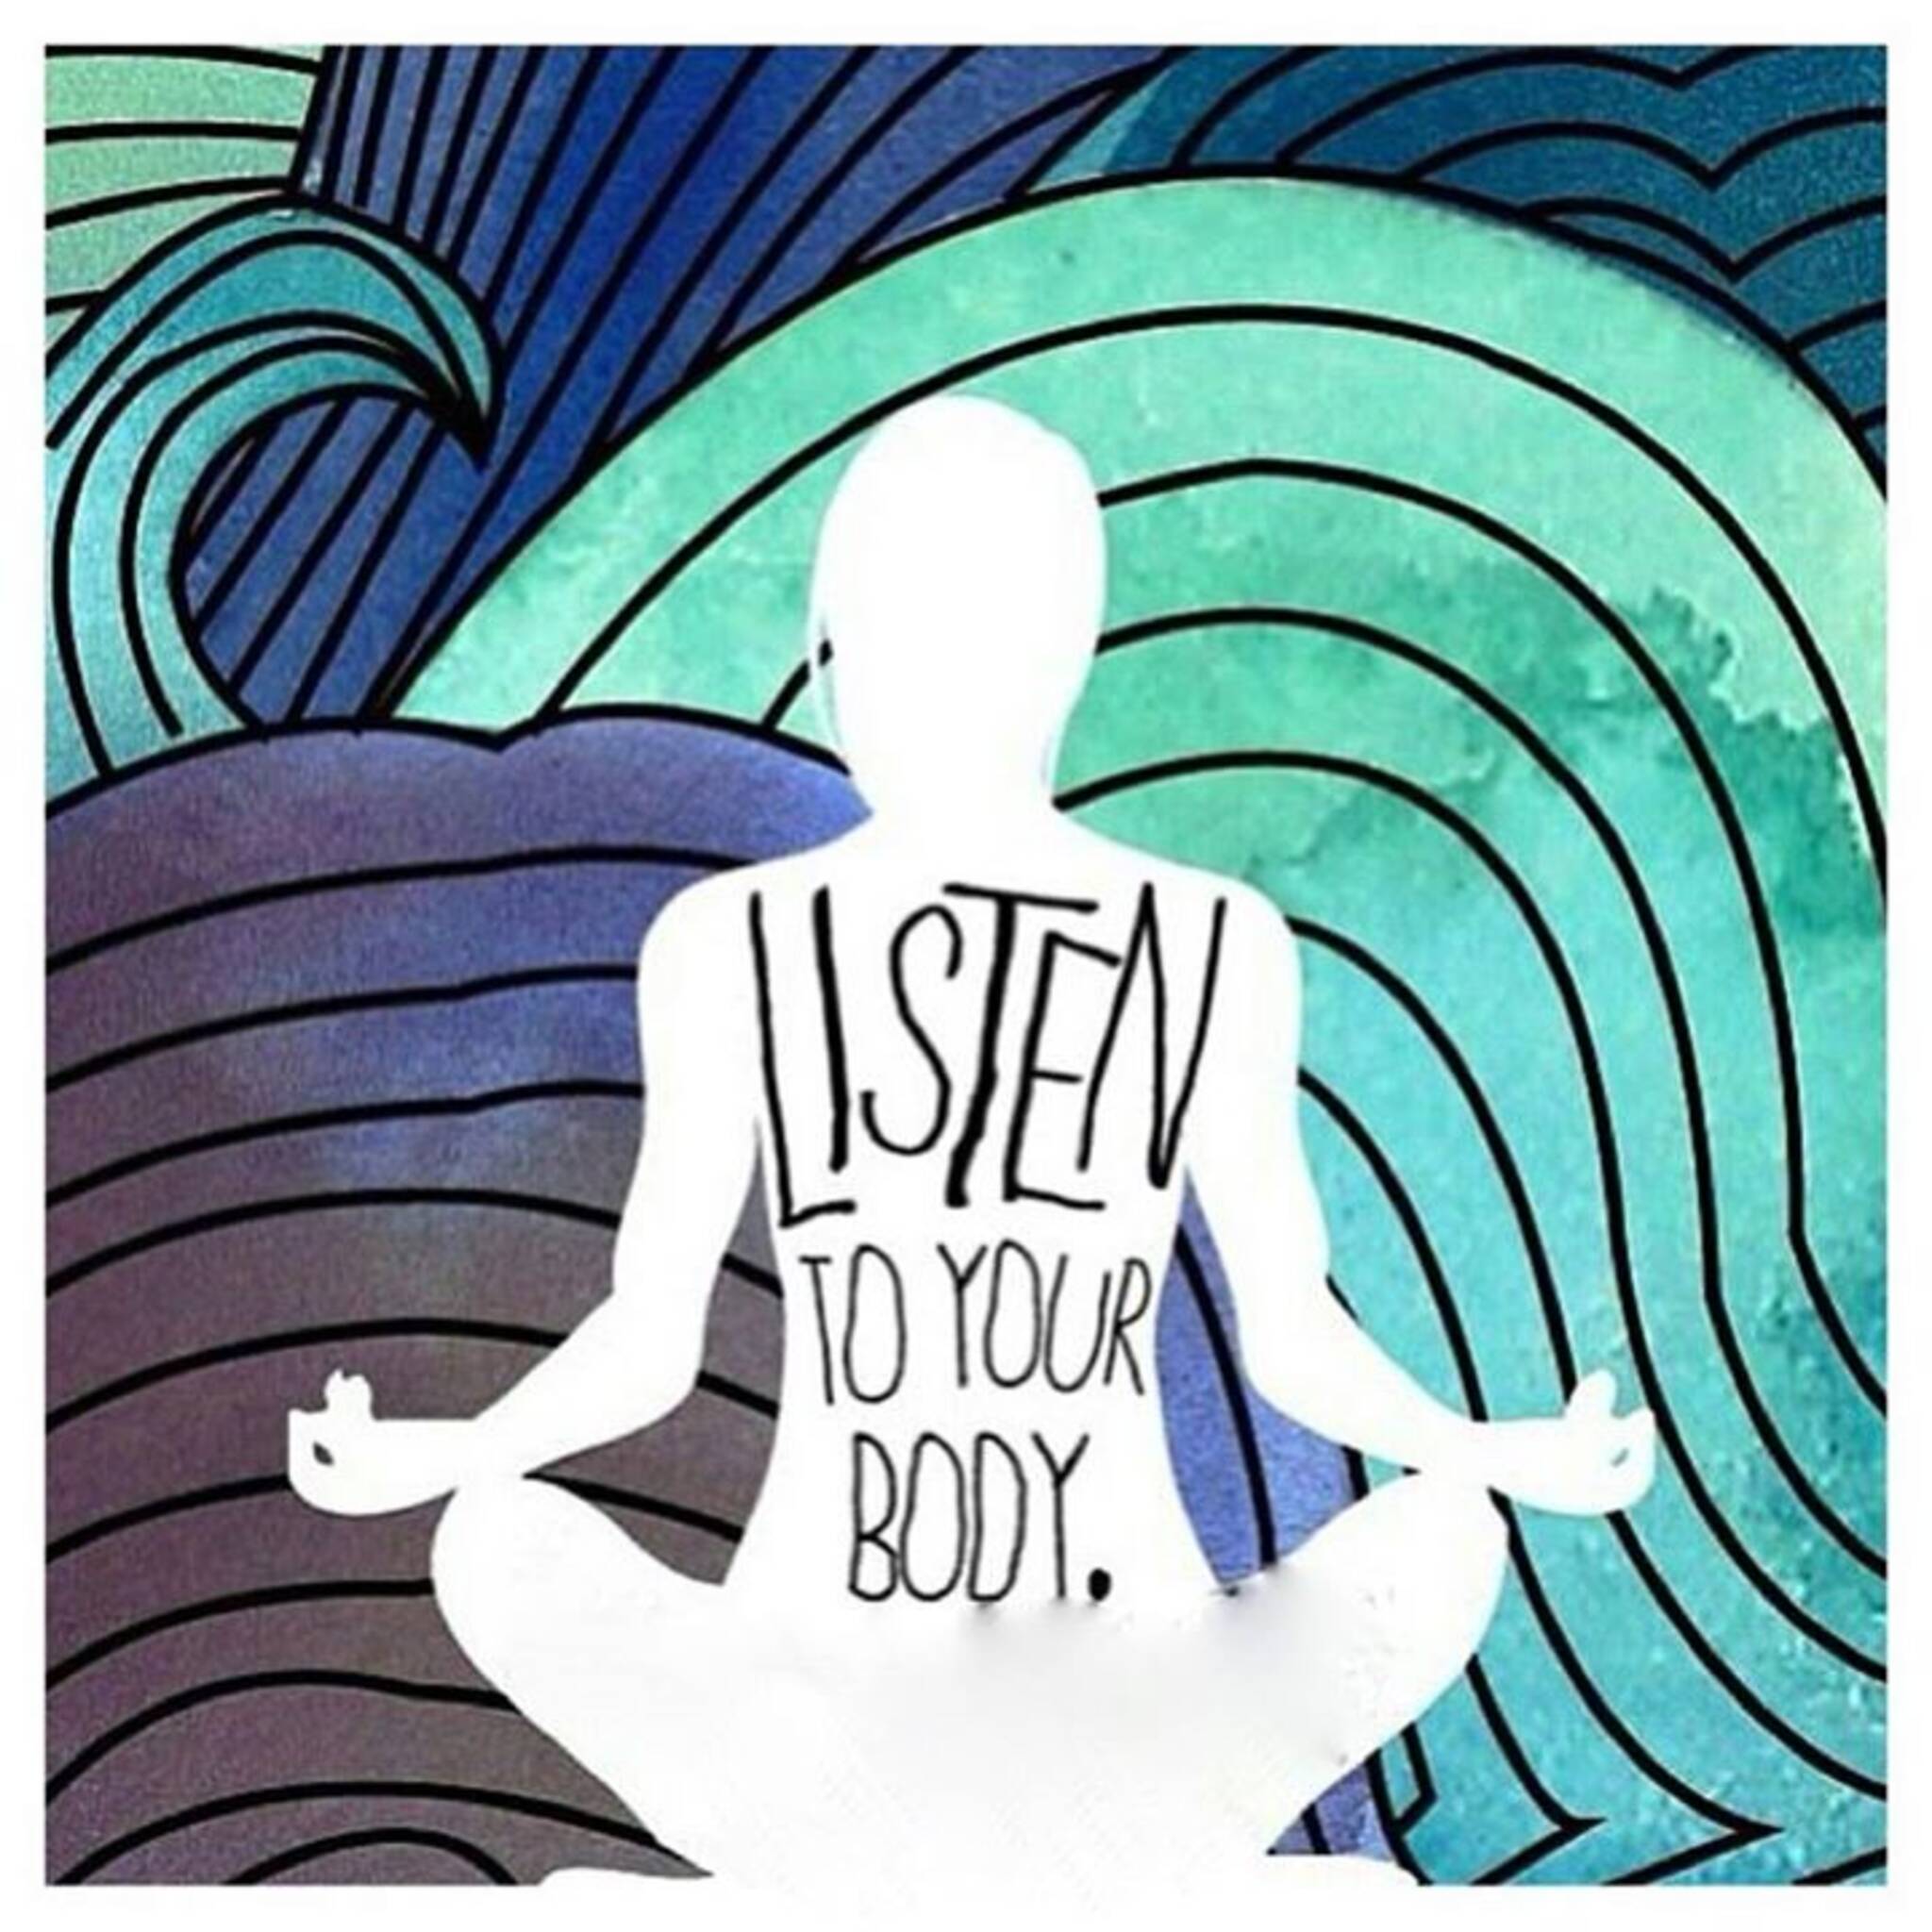 She s clever. Слушайте свое тело. Слушай тело. Слушать свое тело. Слушай свое тело картинки.